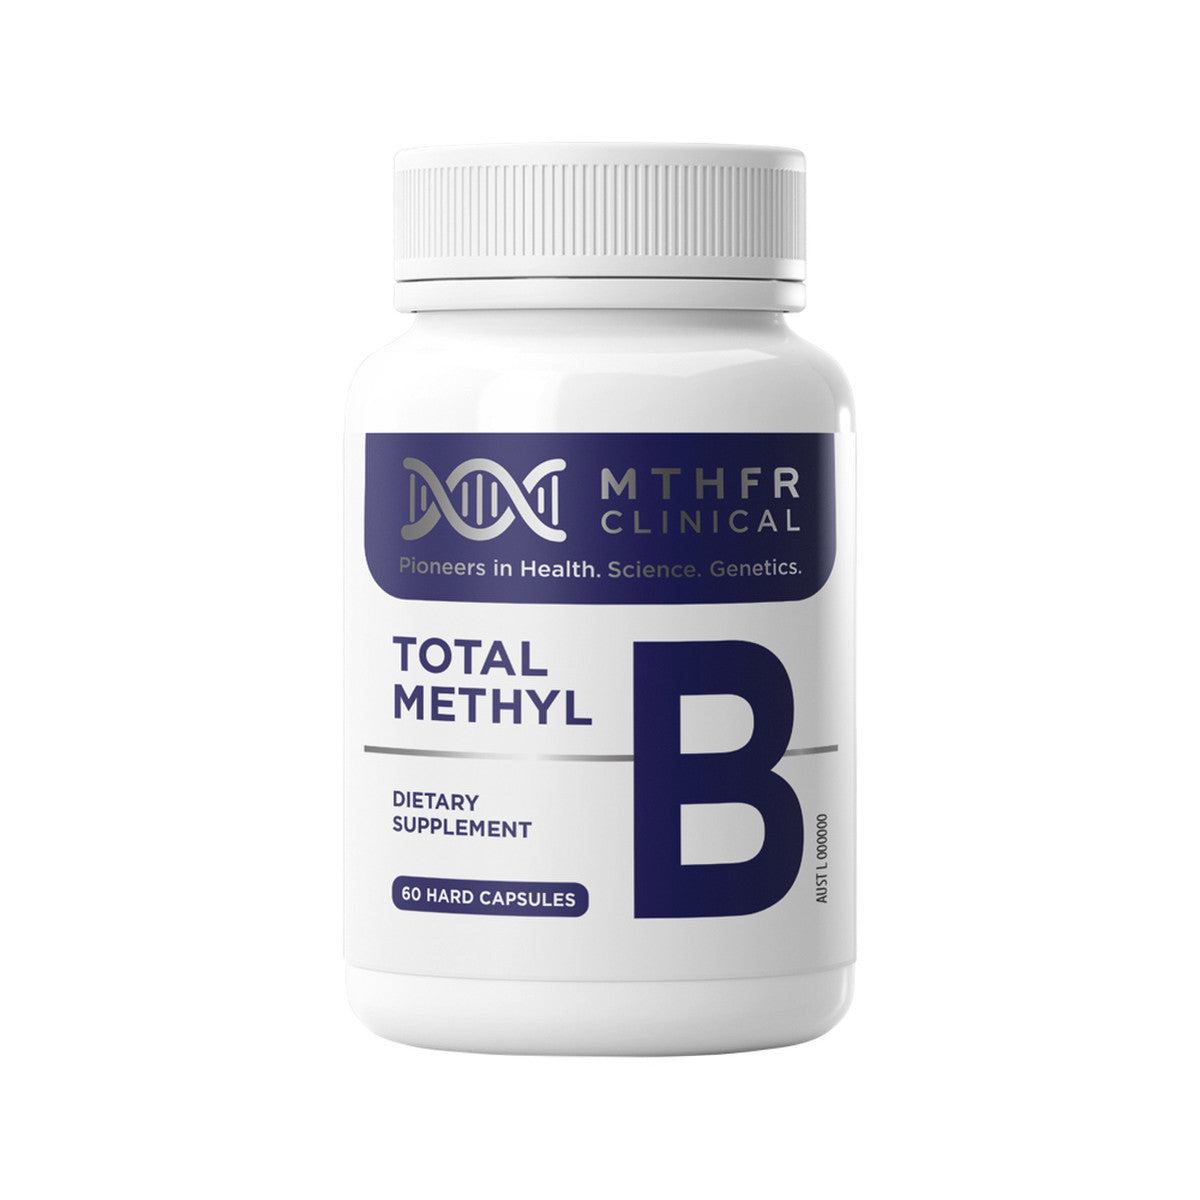 Mthfr Clinical - Total Methyl B